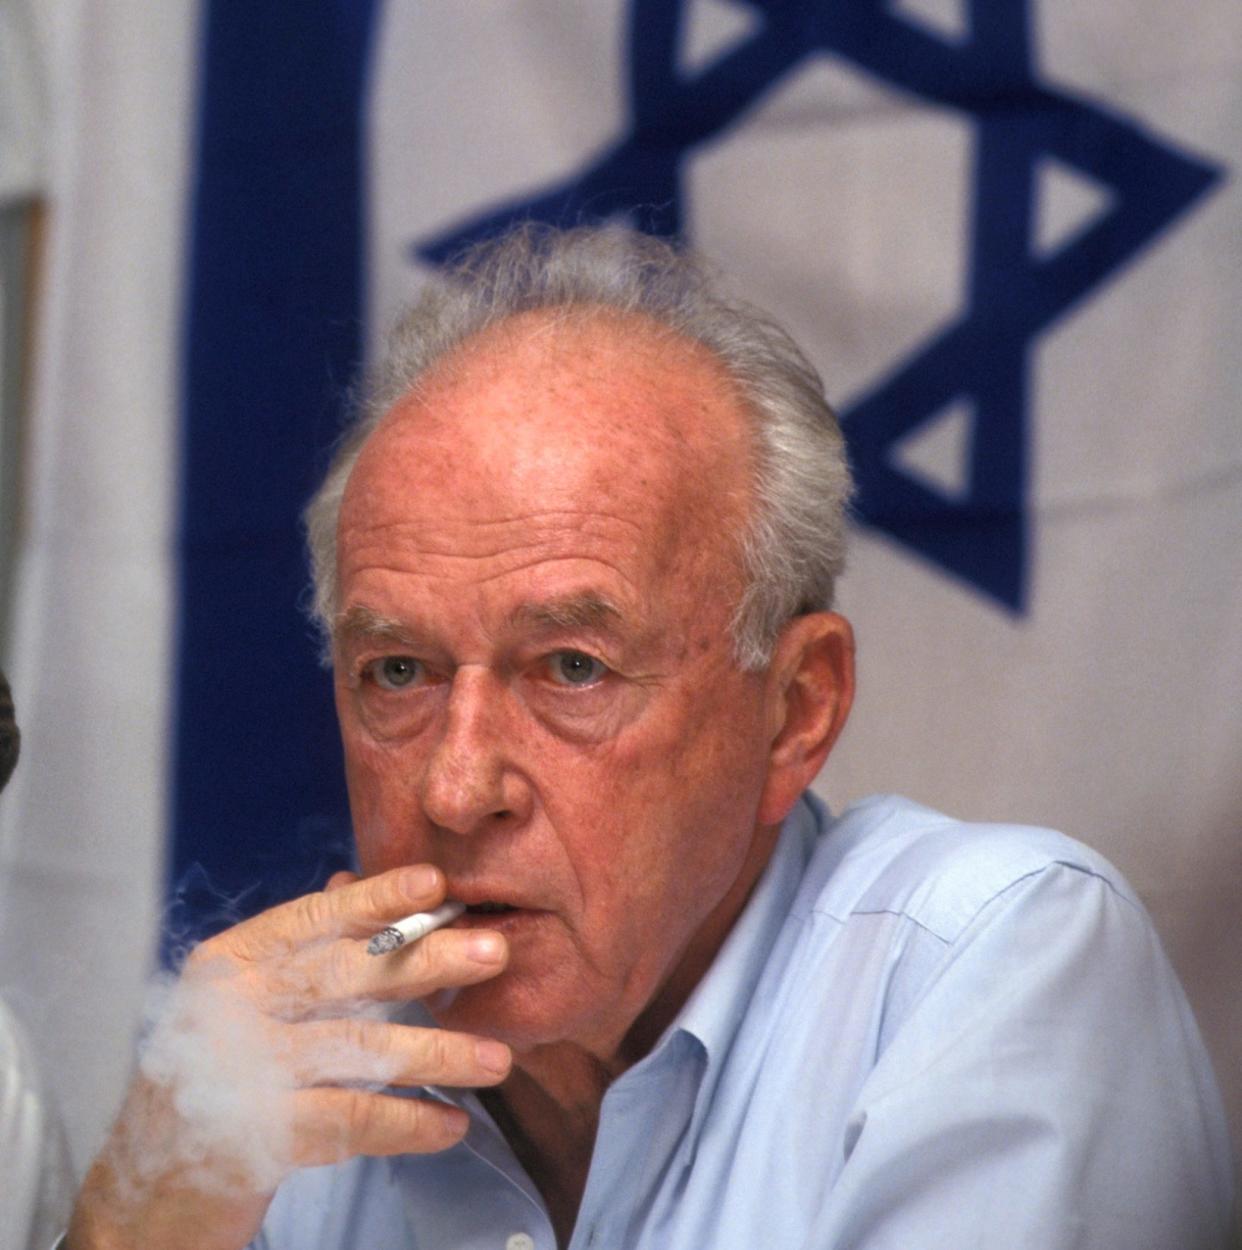 Yitzhak Rabin, the former prime minister of Israel